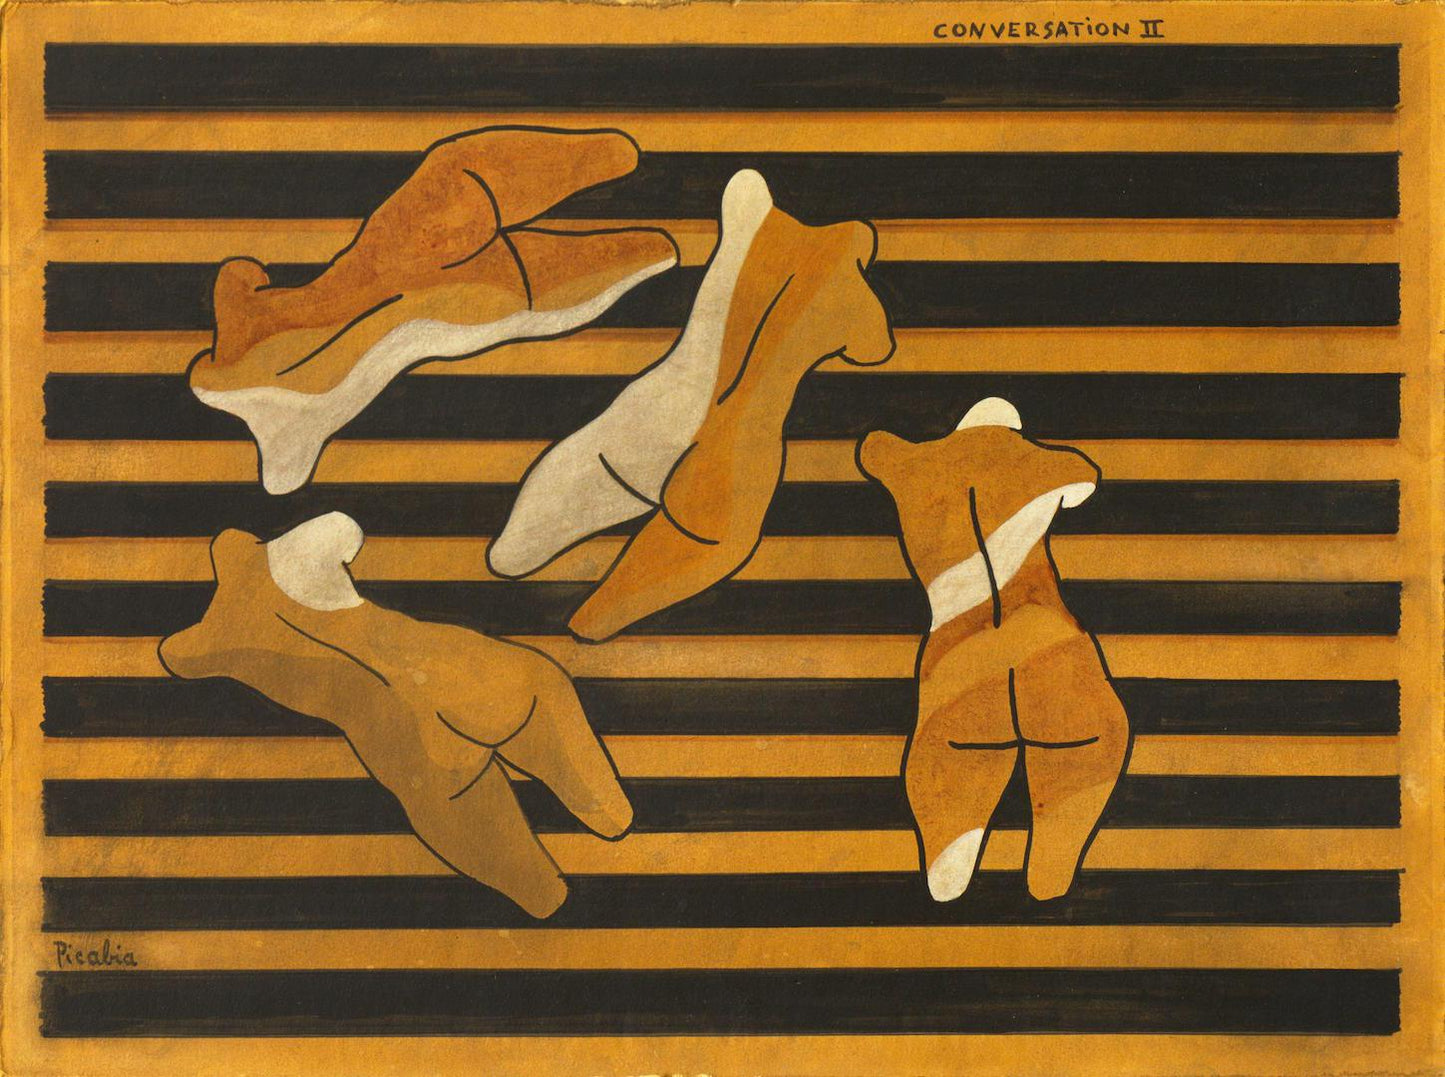 Francis Picabia - Conversation II